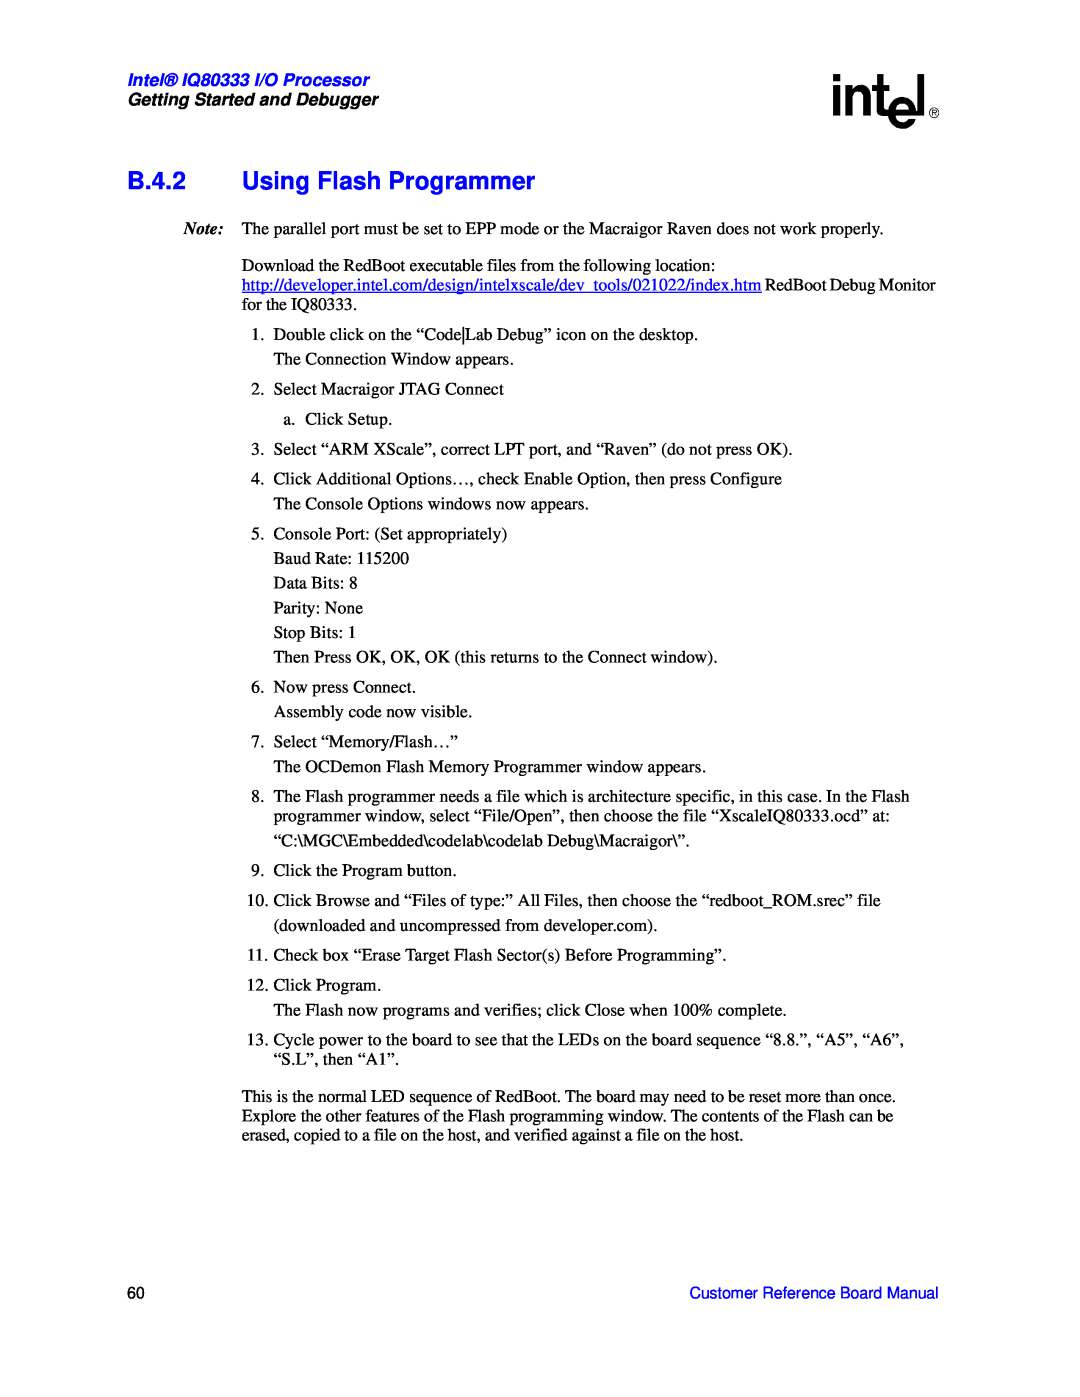 Intel manual B.4.2 Using Flash Programmer, Intel IQ80333 I/O Processor, Getting Started and Debugger 